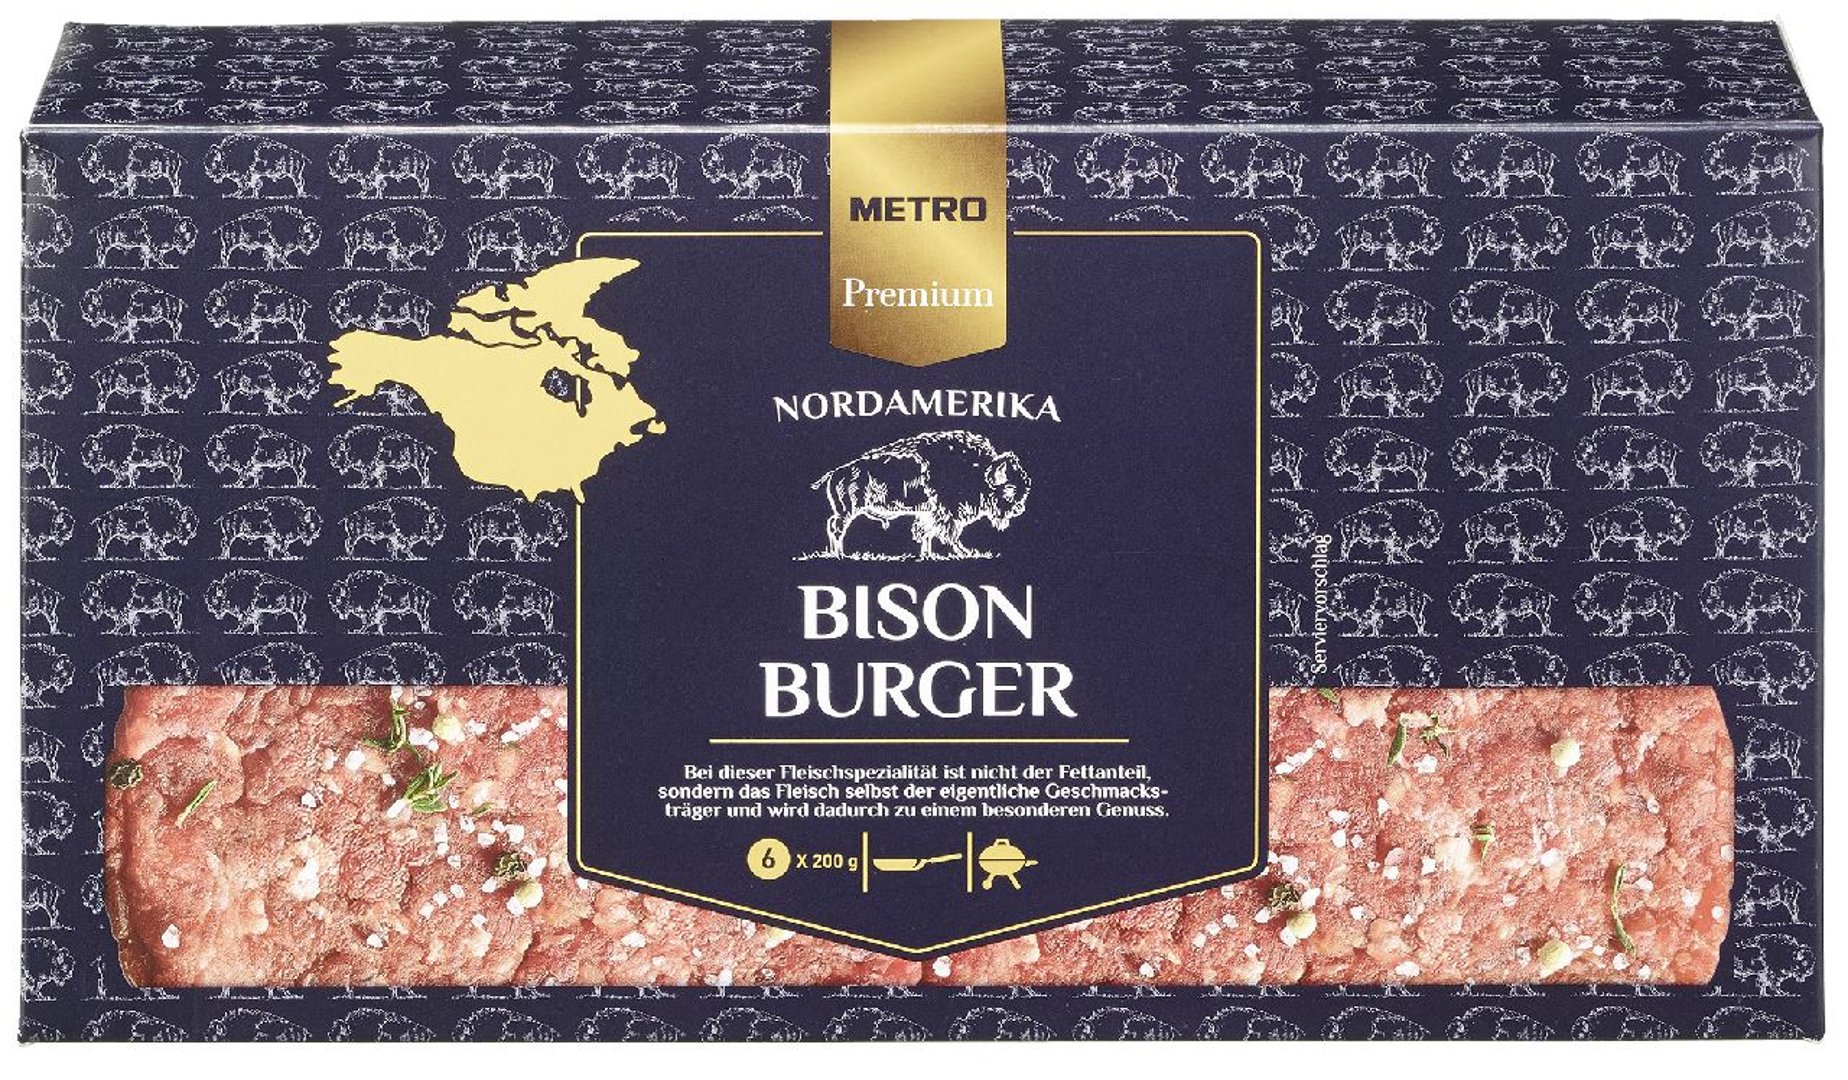 METRO Premium - Bison Burger tiefgefroren, roh, 6 Stück à 200 g, vak.-verpackt 1,2 kg Packung